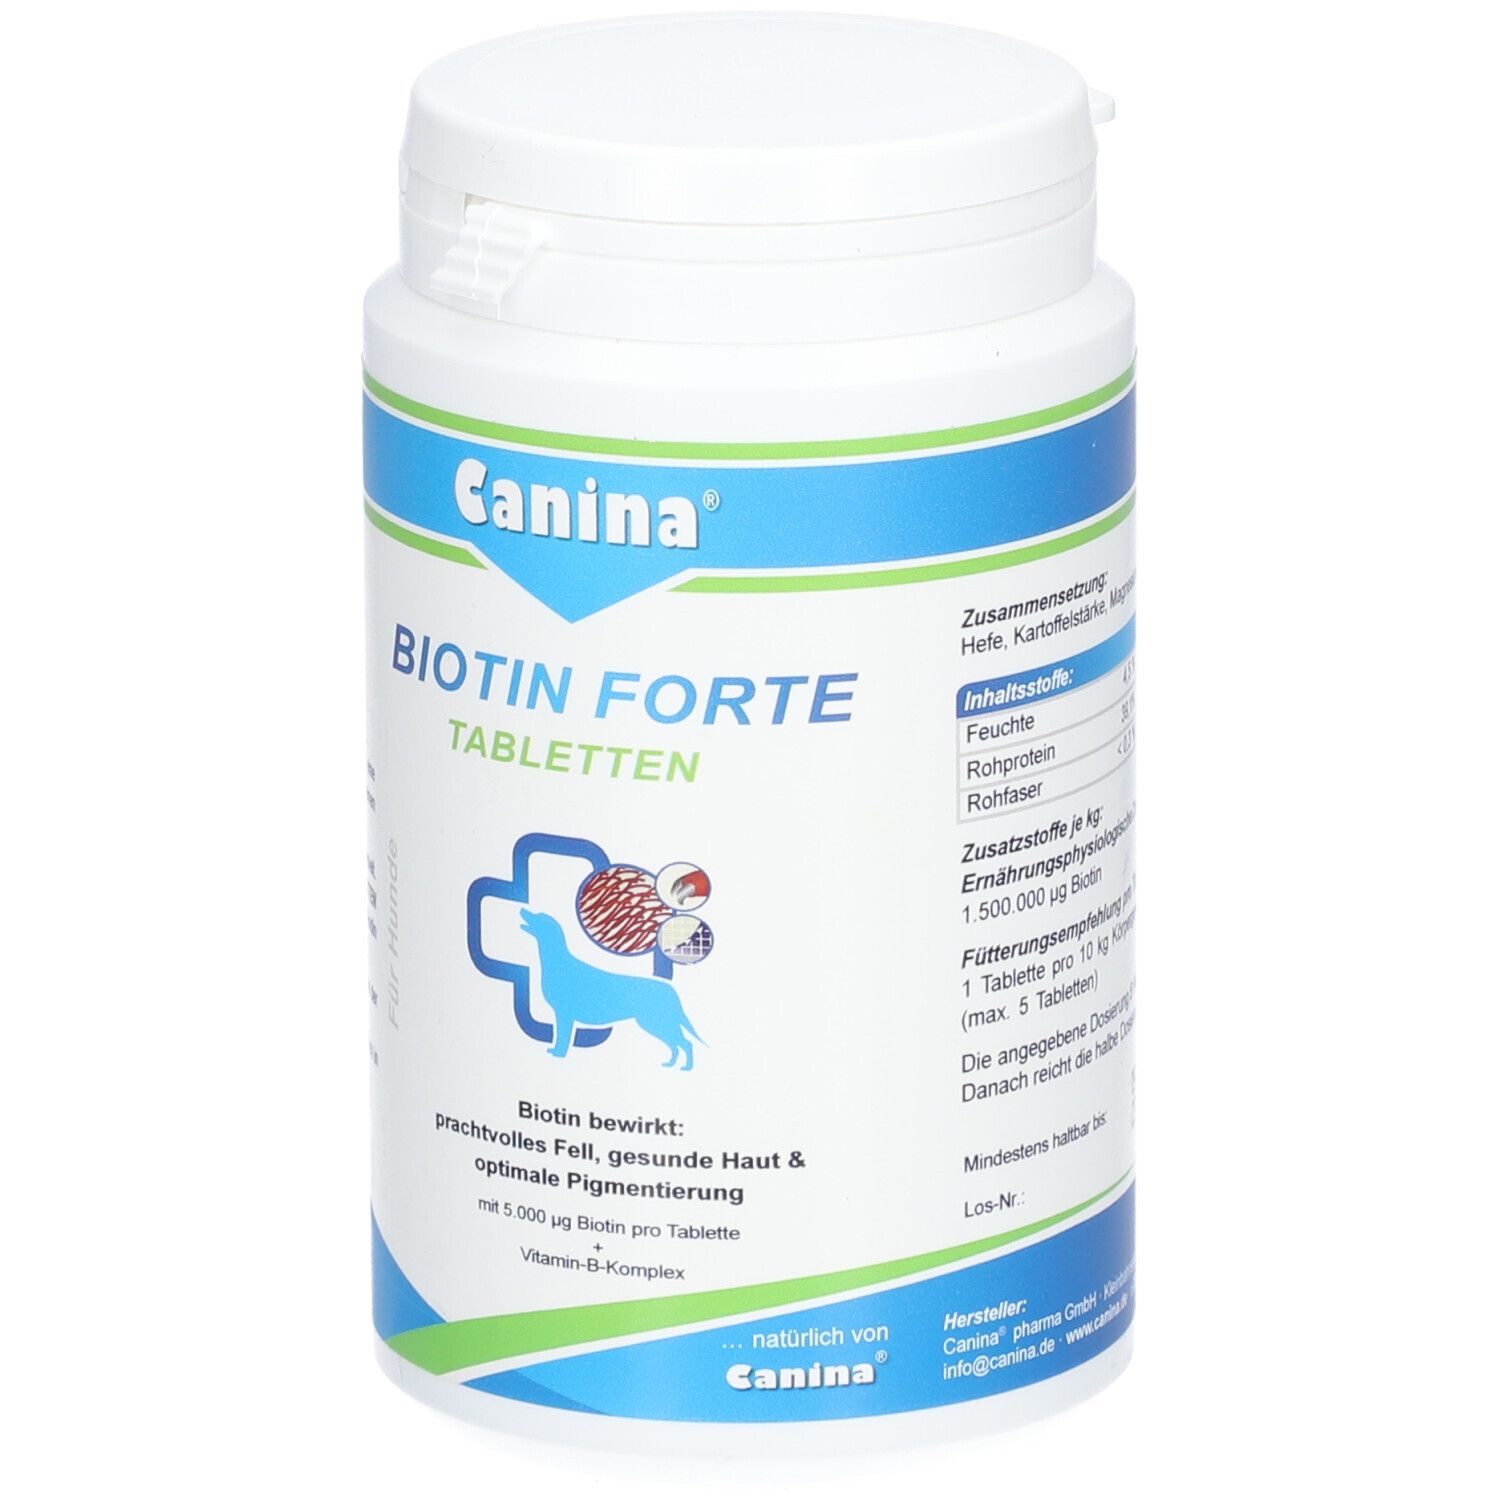 Canina® Biotin Forte